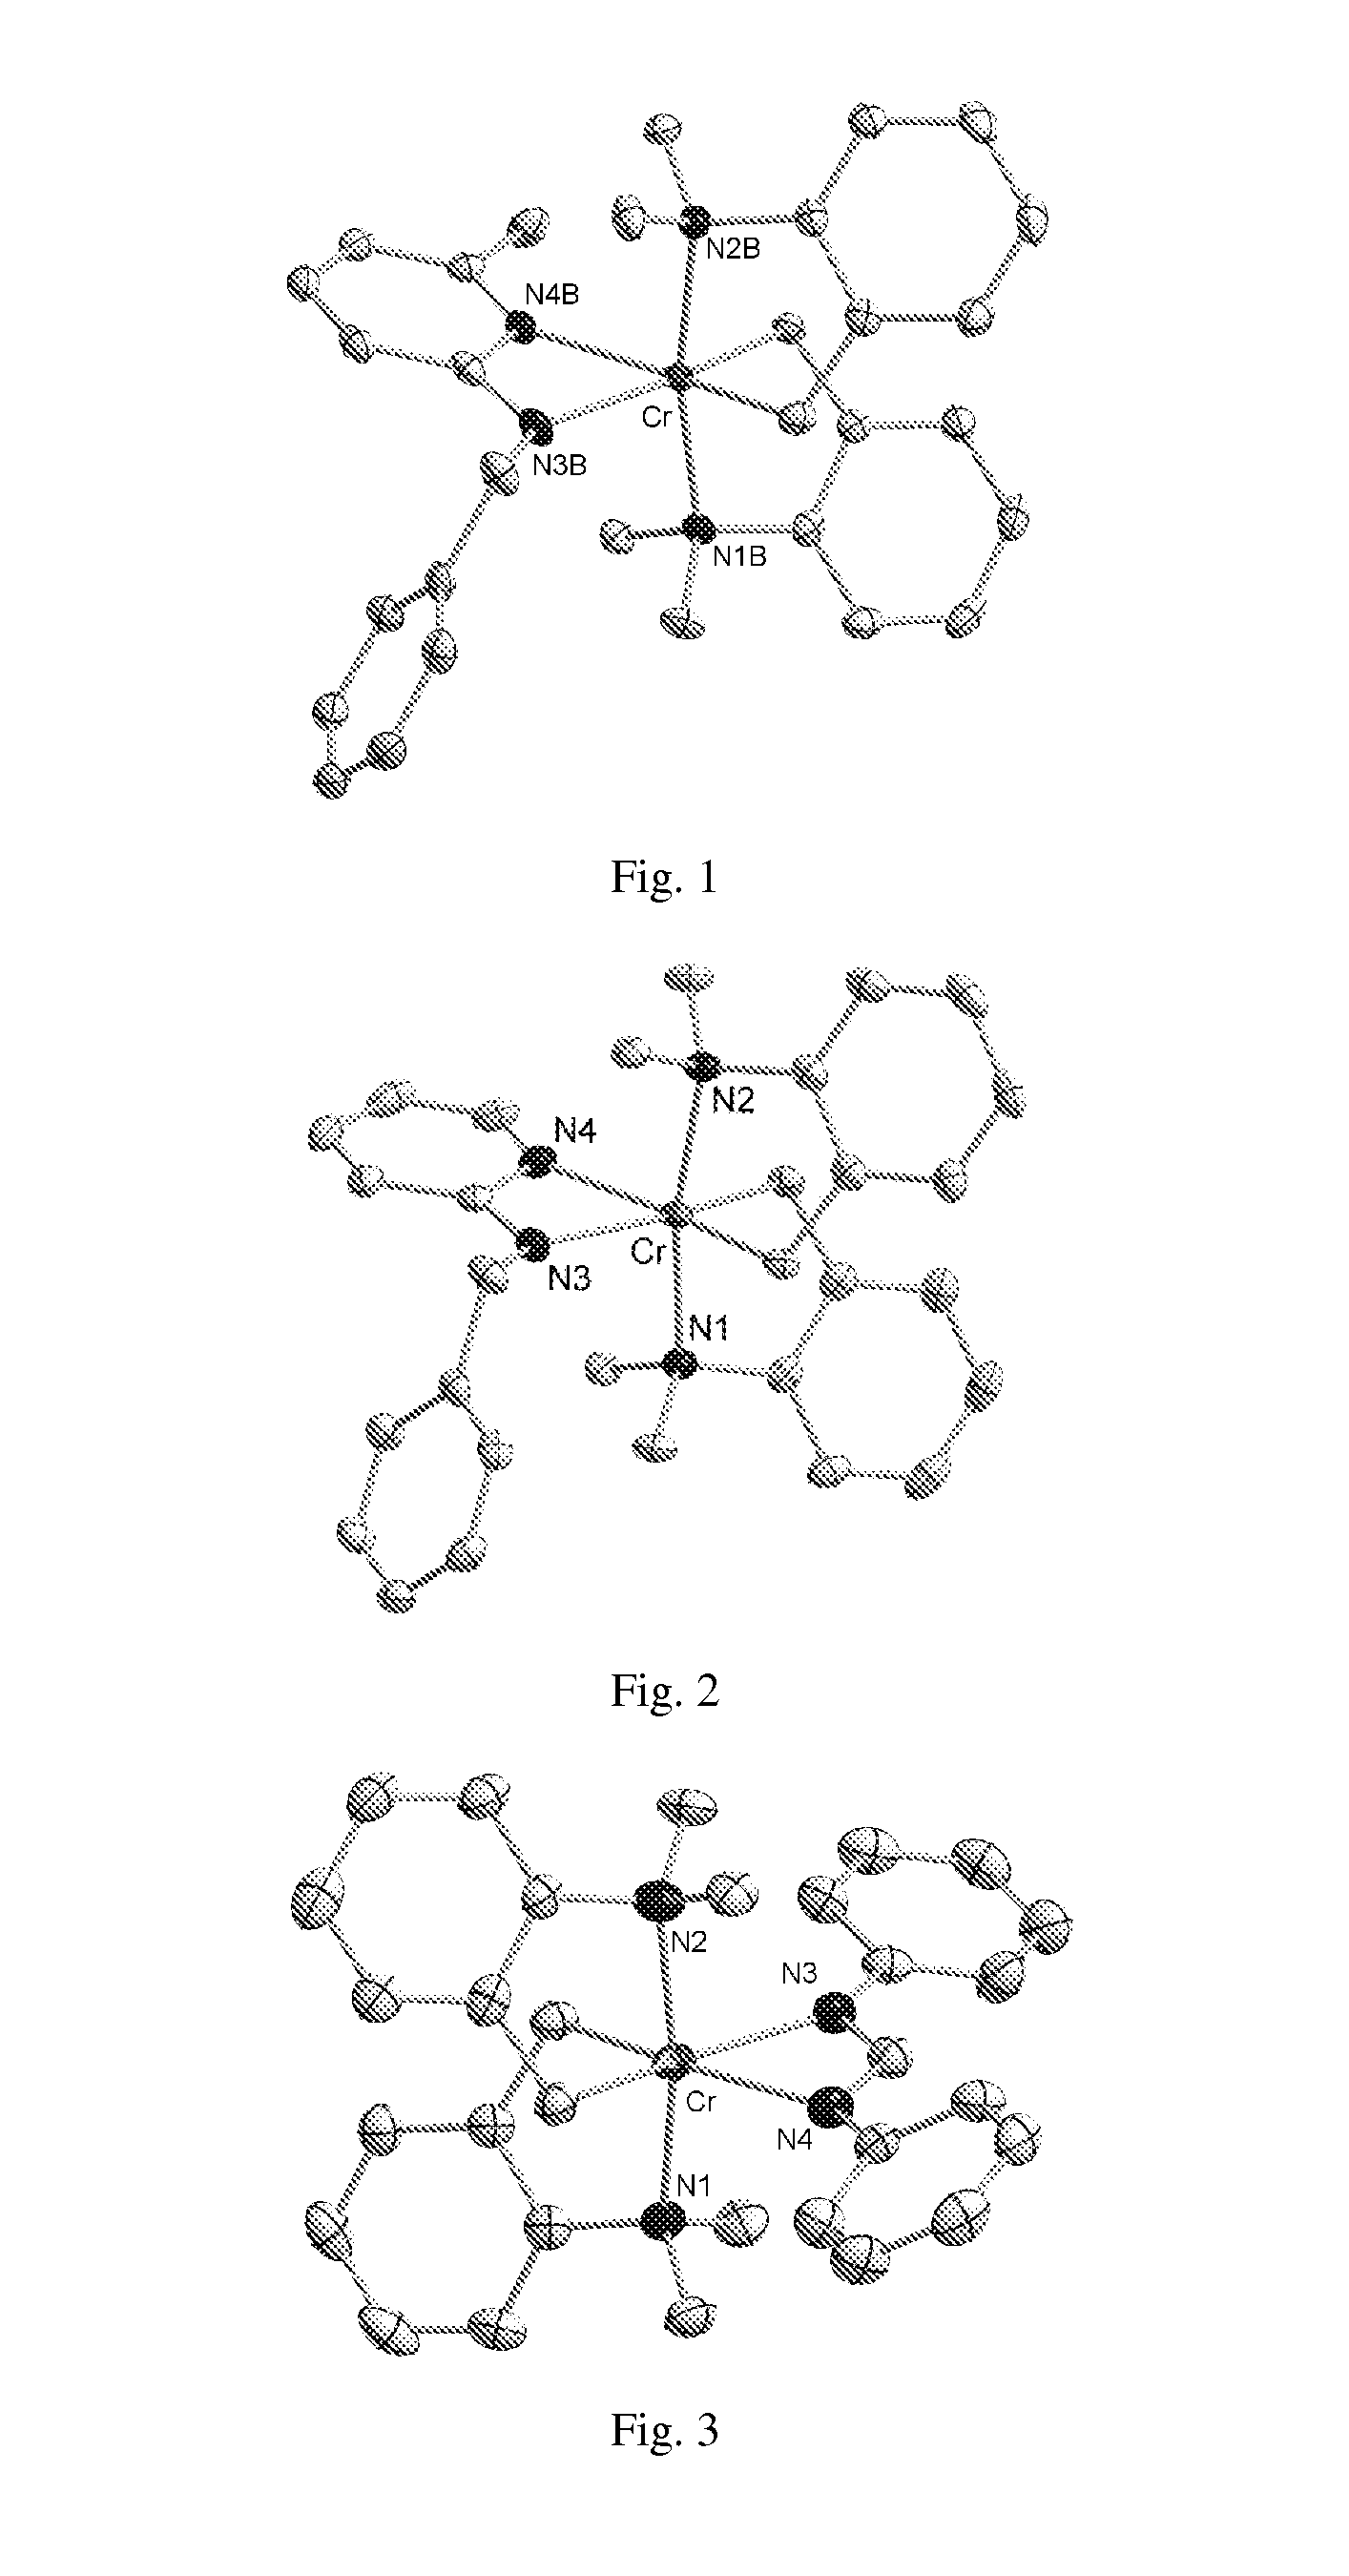 Non-cyclopentadienyl-based chromium catalysts for olefin polymerization